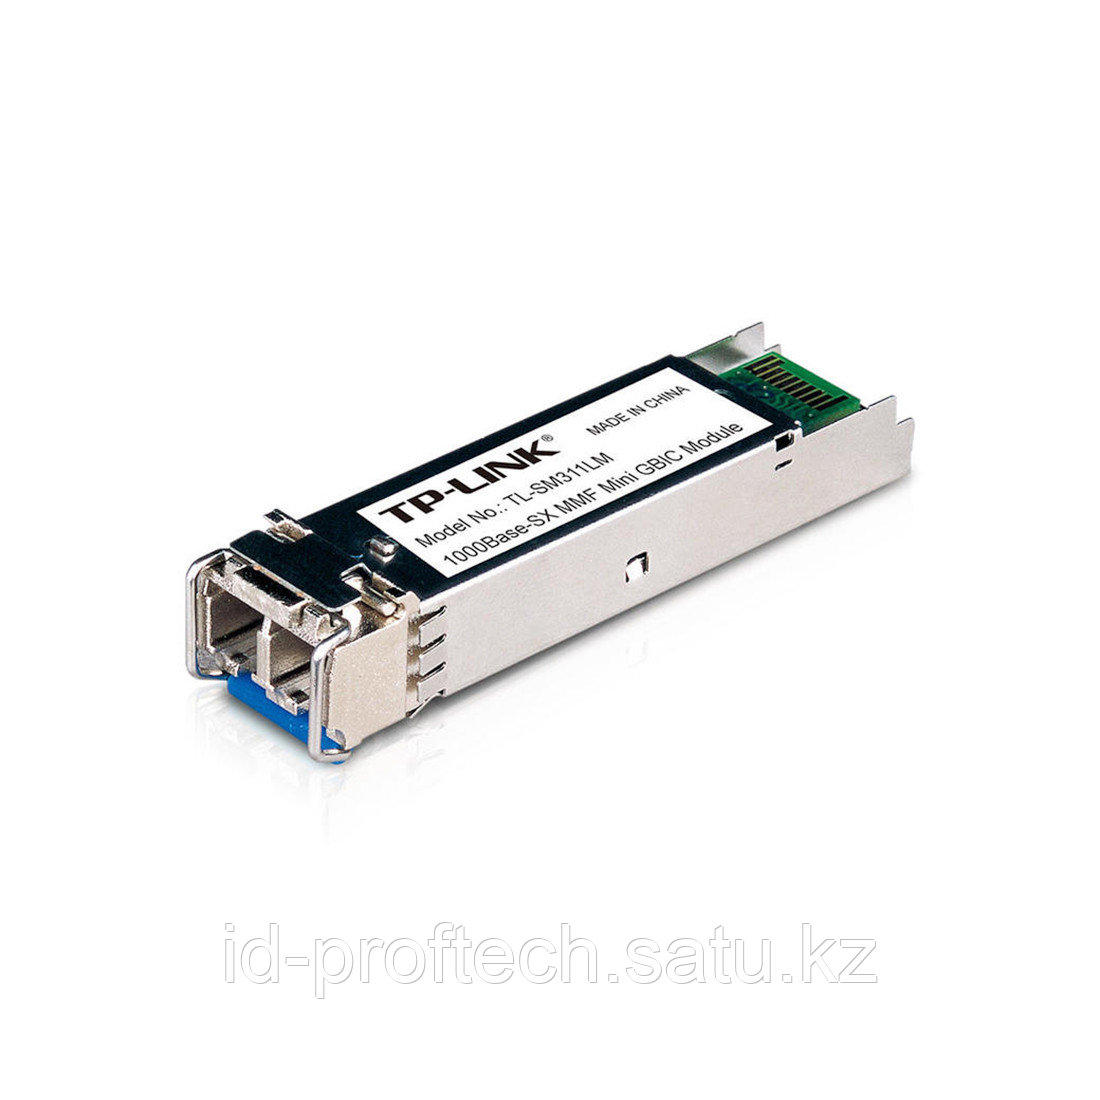 Оптический транссивер GbE SFP Tp-Link TL-SM311LM Gigabit SFP module, Multi-mode, MiniGBIC, LC interface, Up to